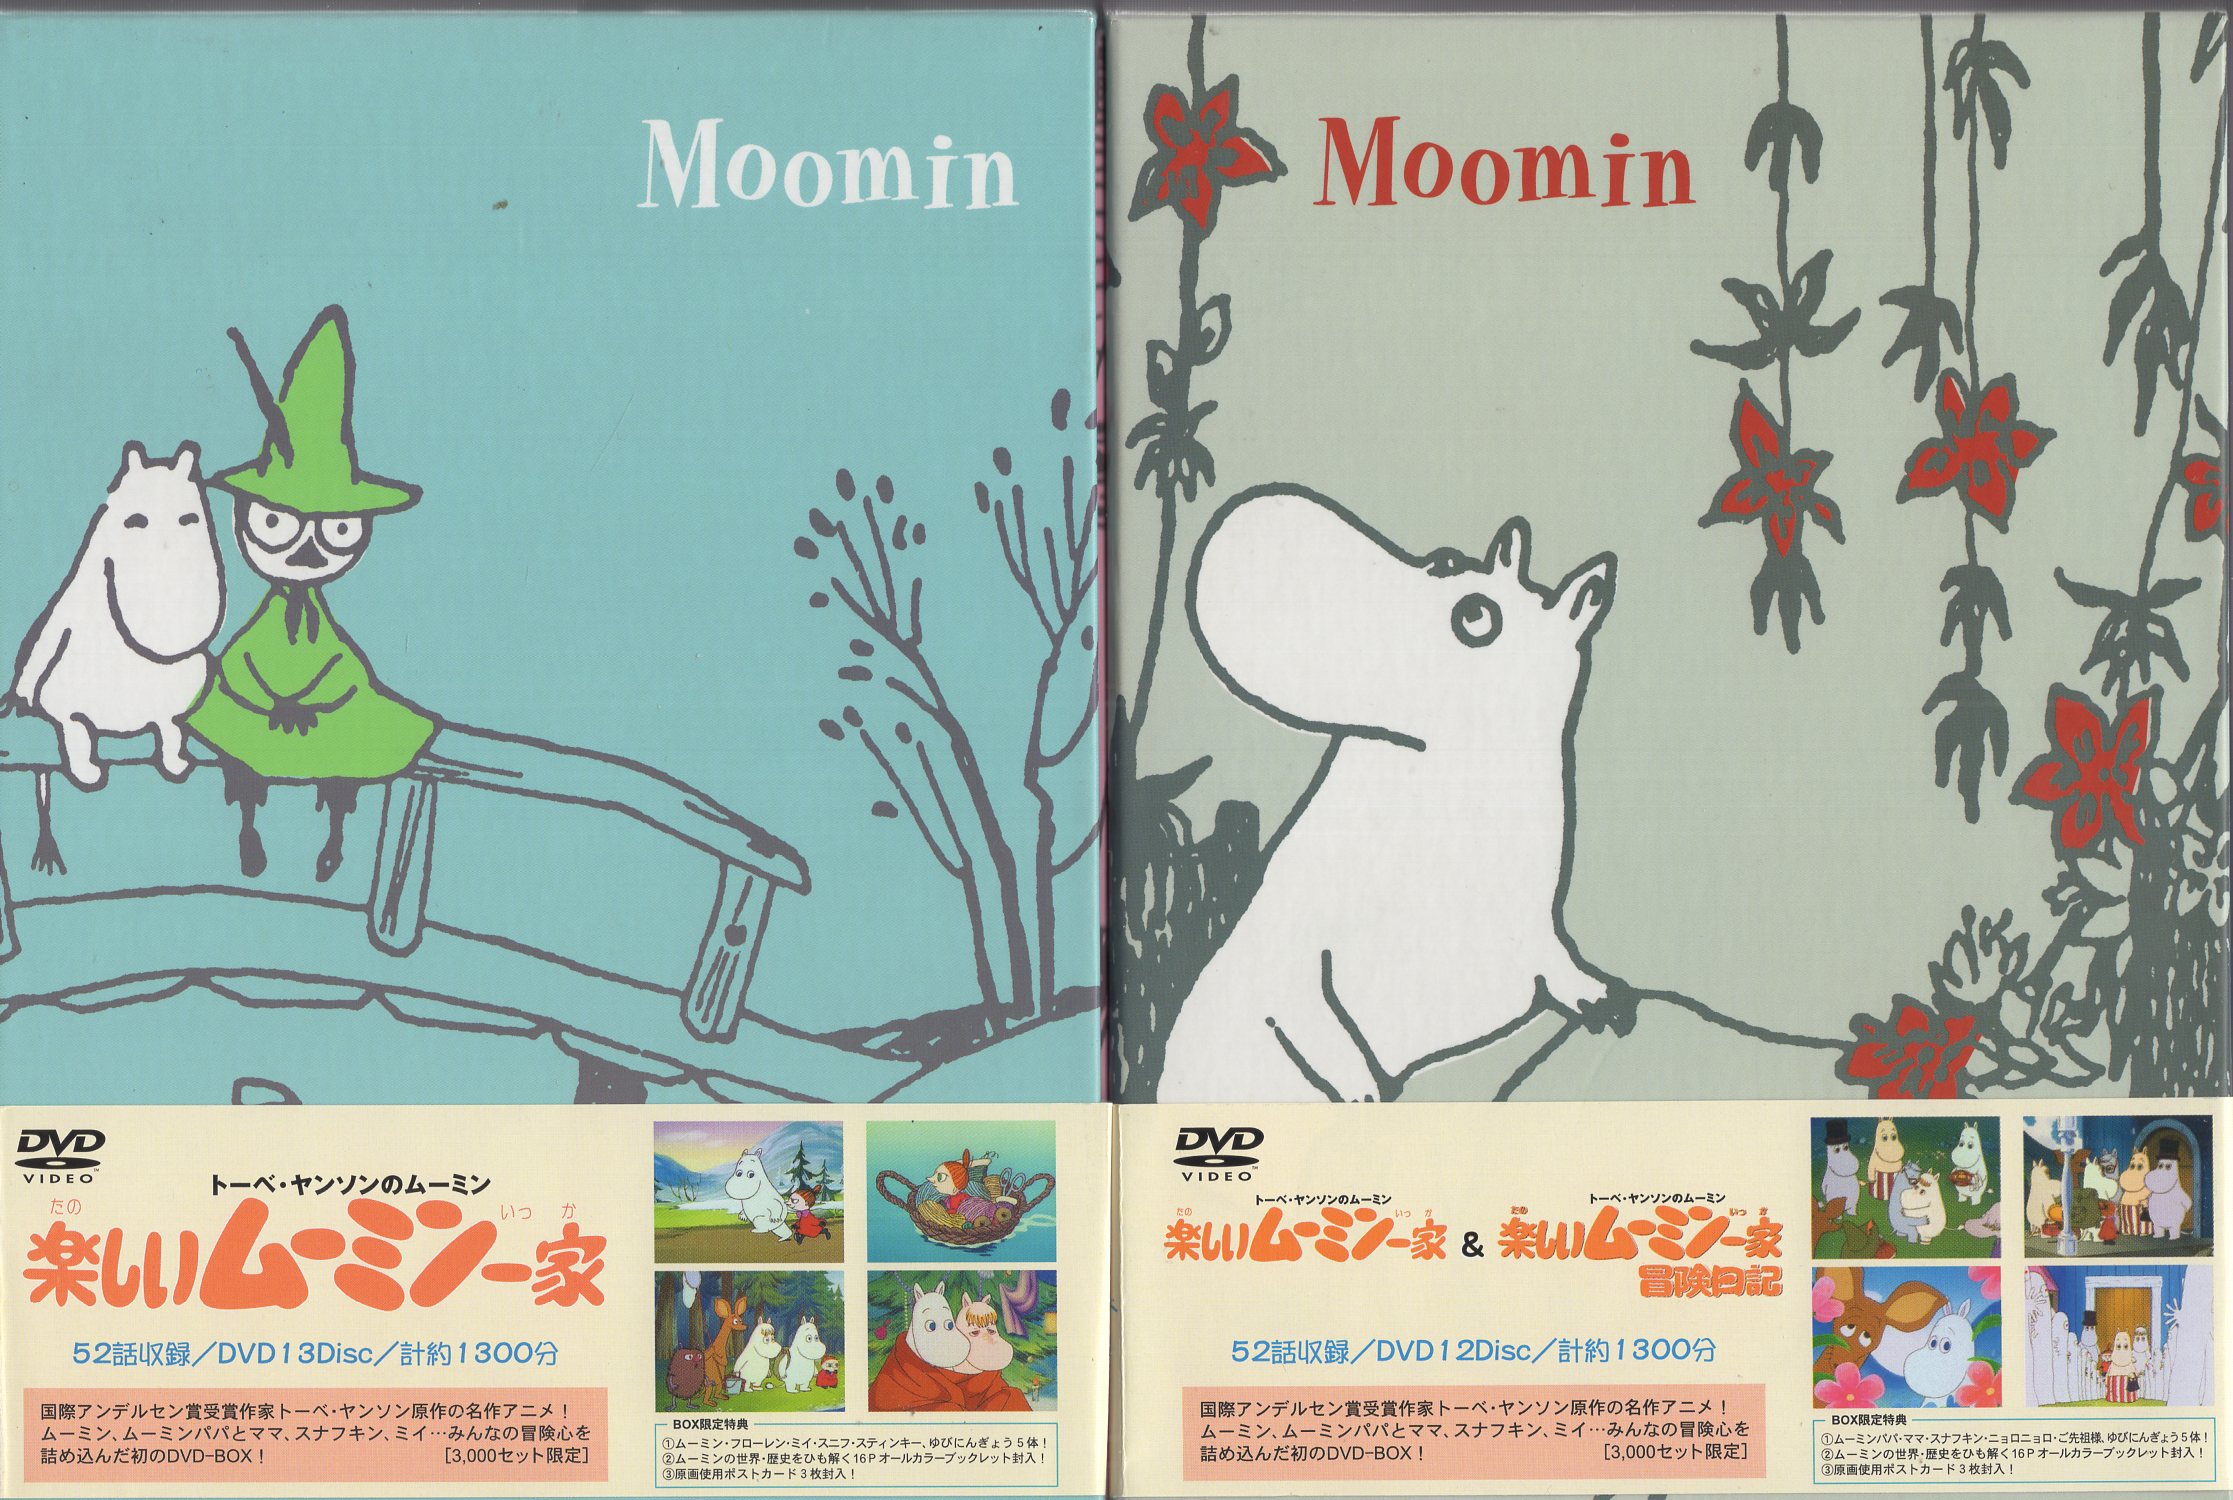 Moomin Original Animation Cel Painting Anime Japan B-99 | eBay